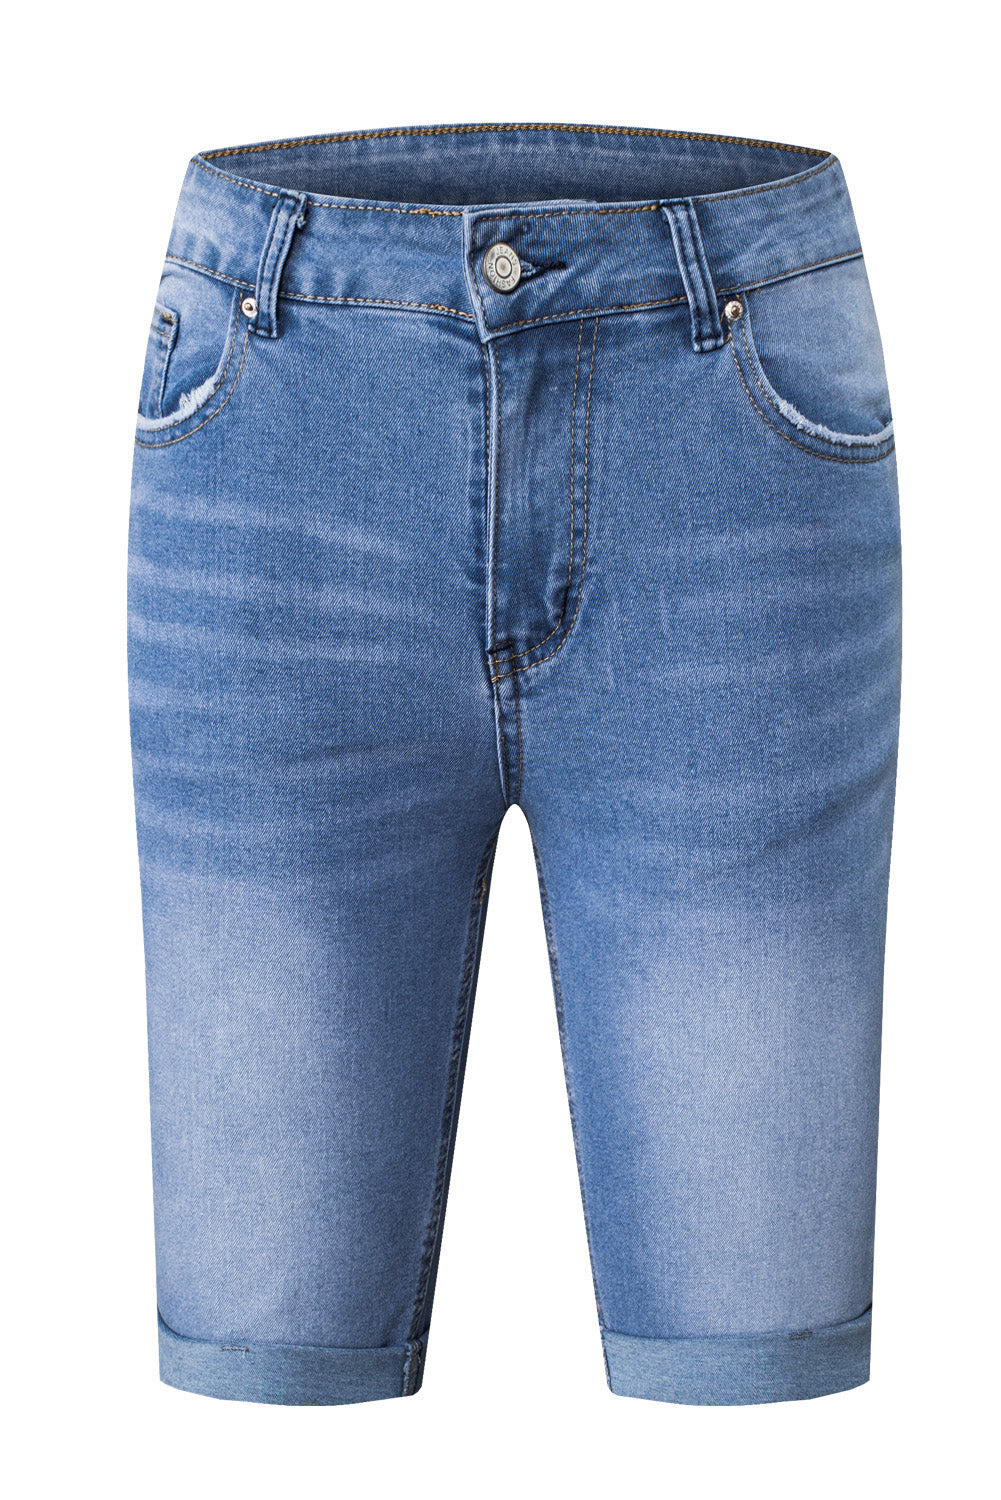 Sky Blue Acid Wash Roll-up Edge Bermuda Short Jeans - SELFTRITSS